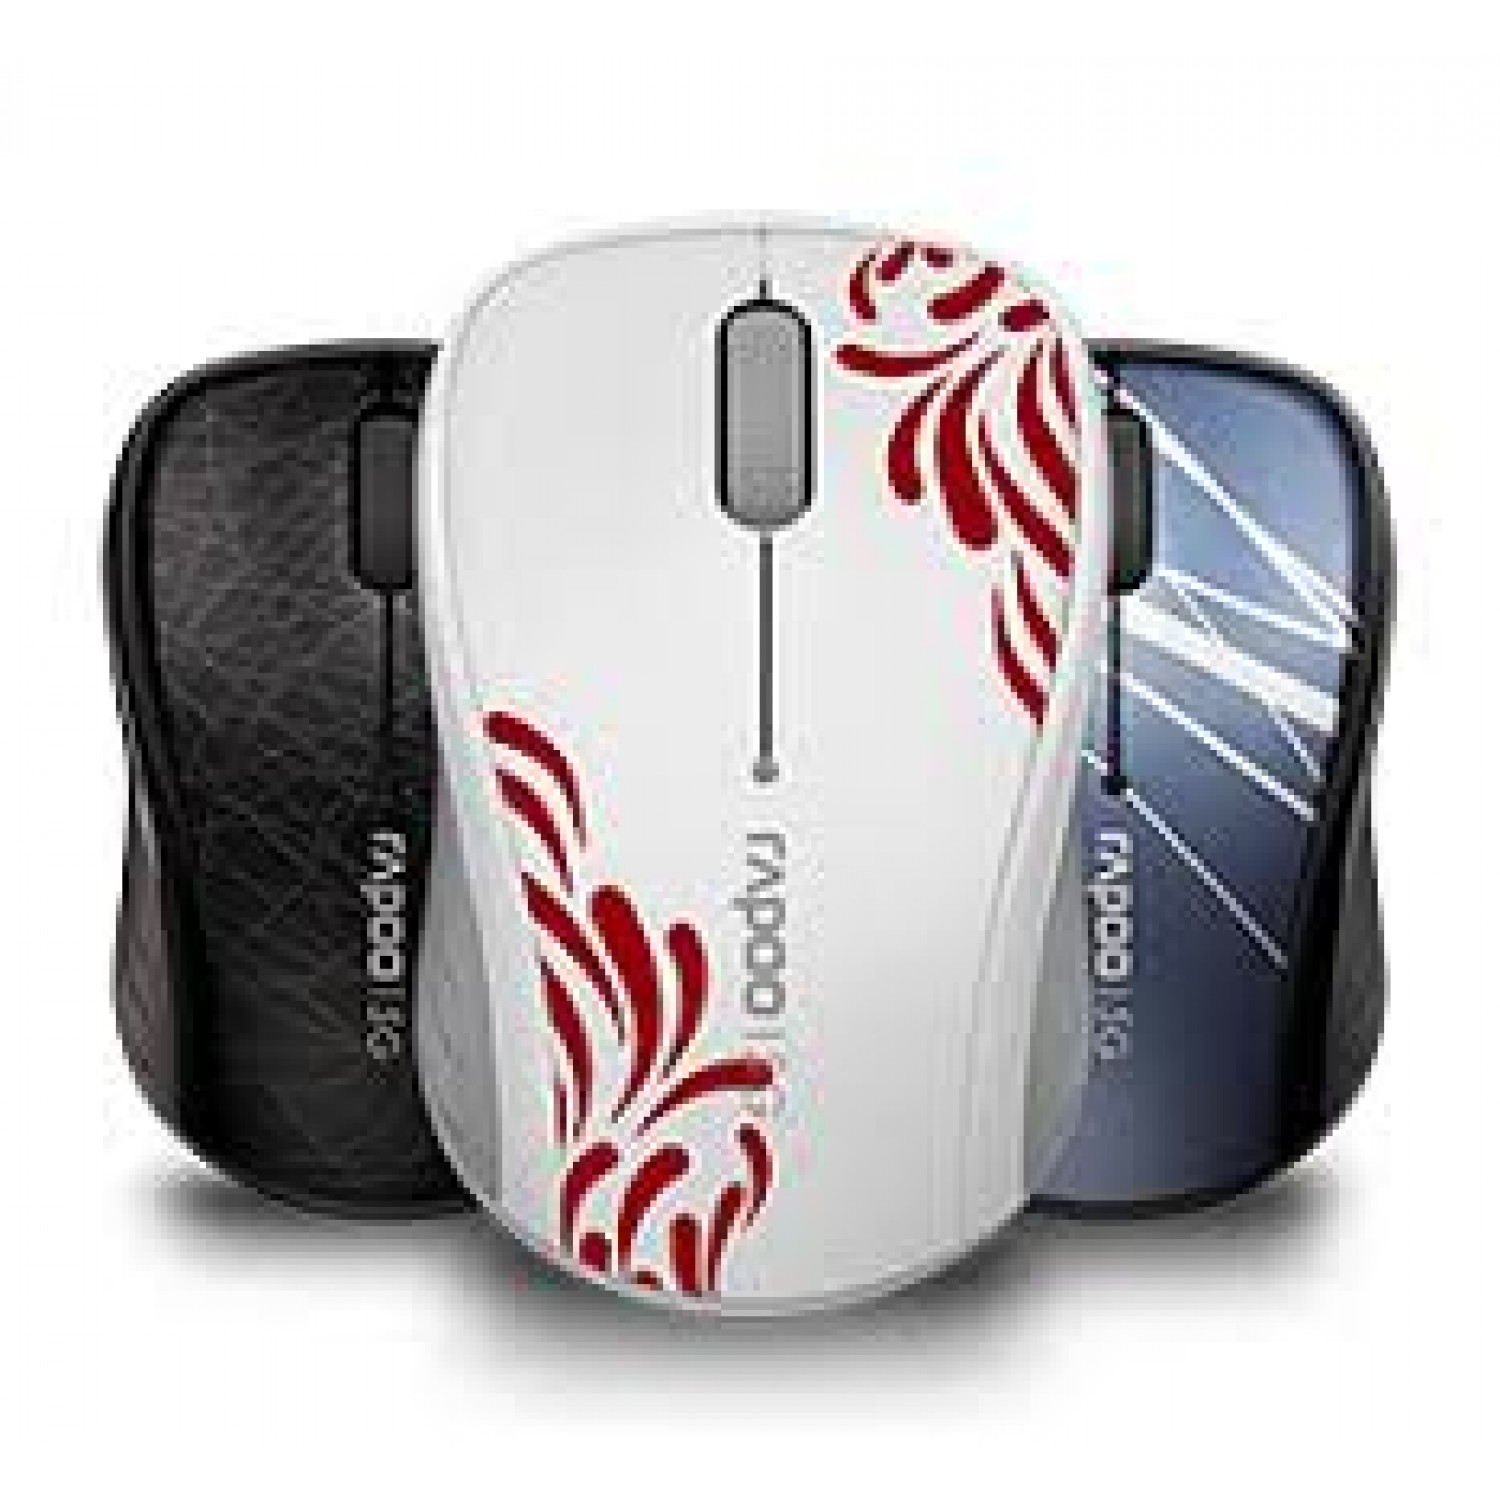 Rapoo 3100p Wireless Mouse